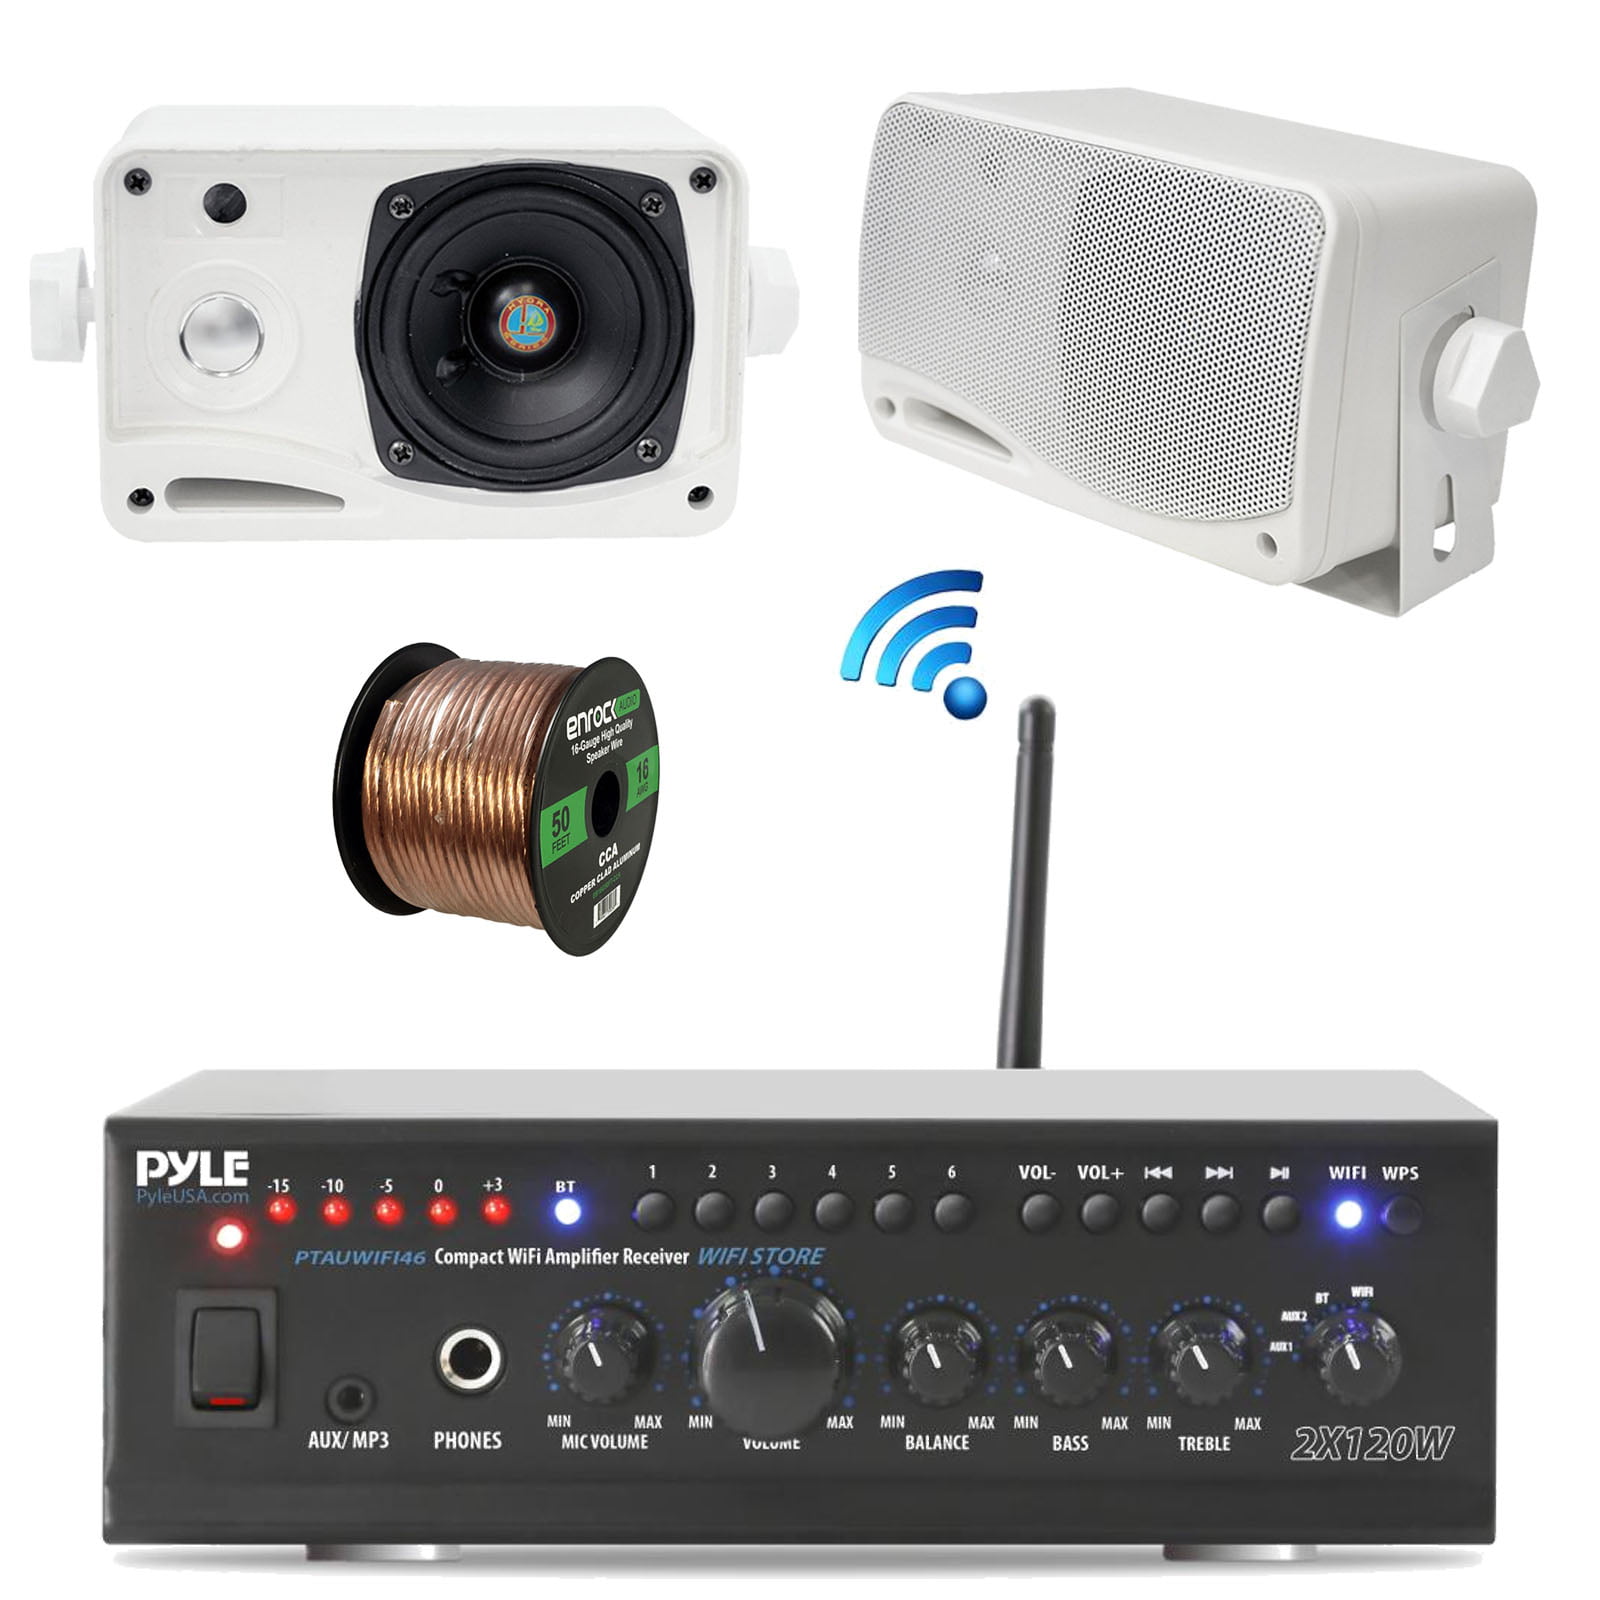 White Pyle Plmr24 3.5" 200-watt 3-way Weather-proof Mini Box Speaker System